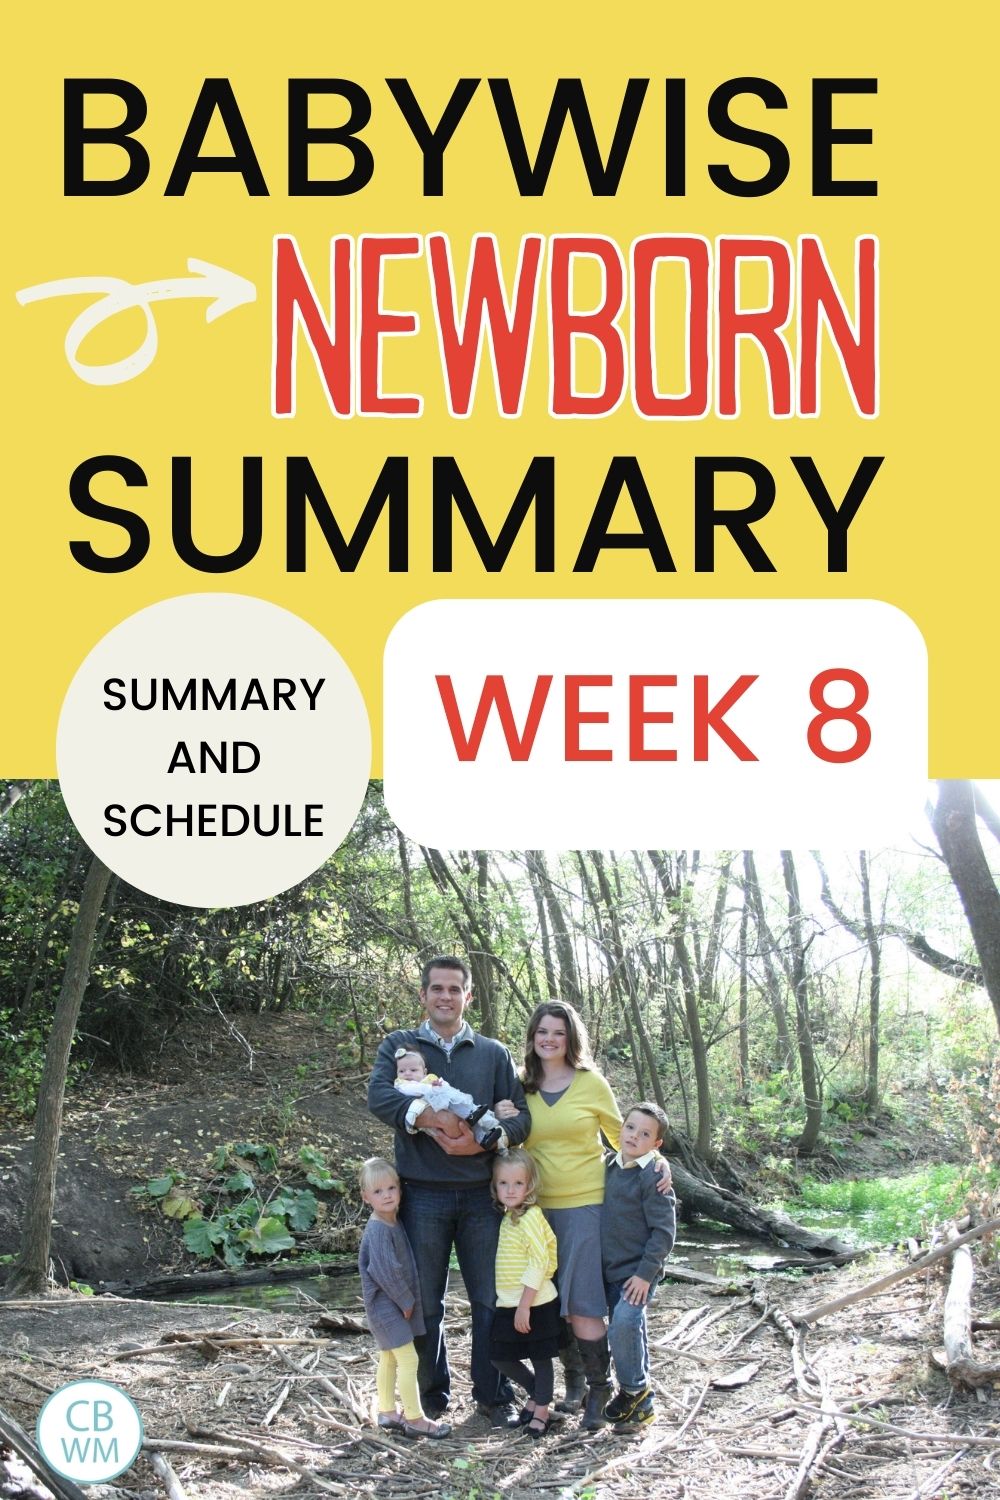 Babywise Newborn summary week 8 pinnable image